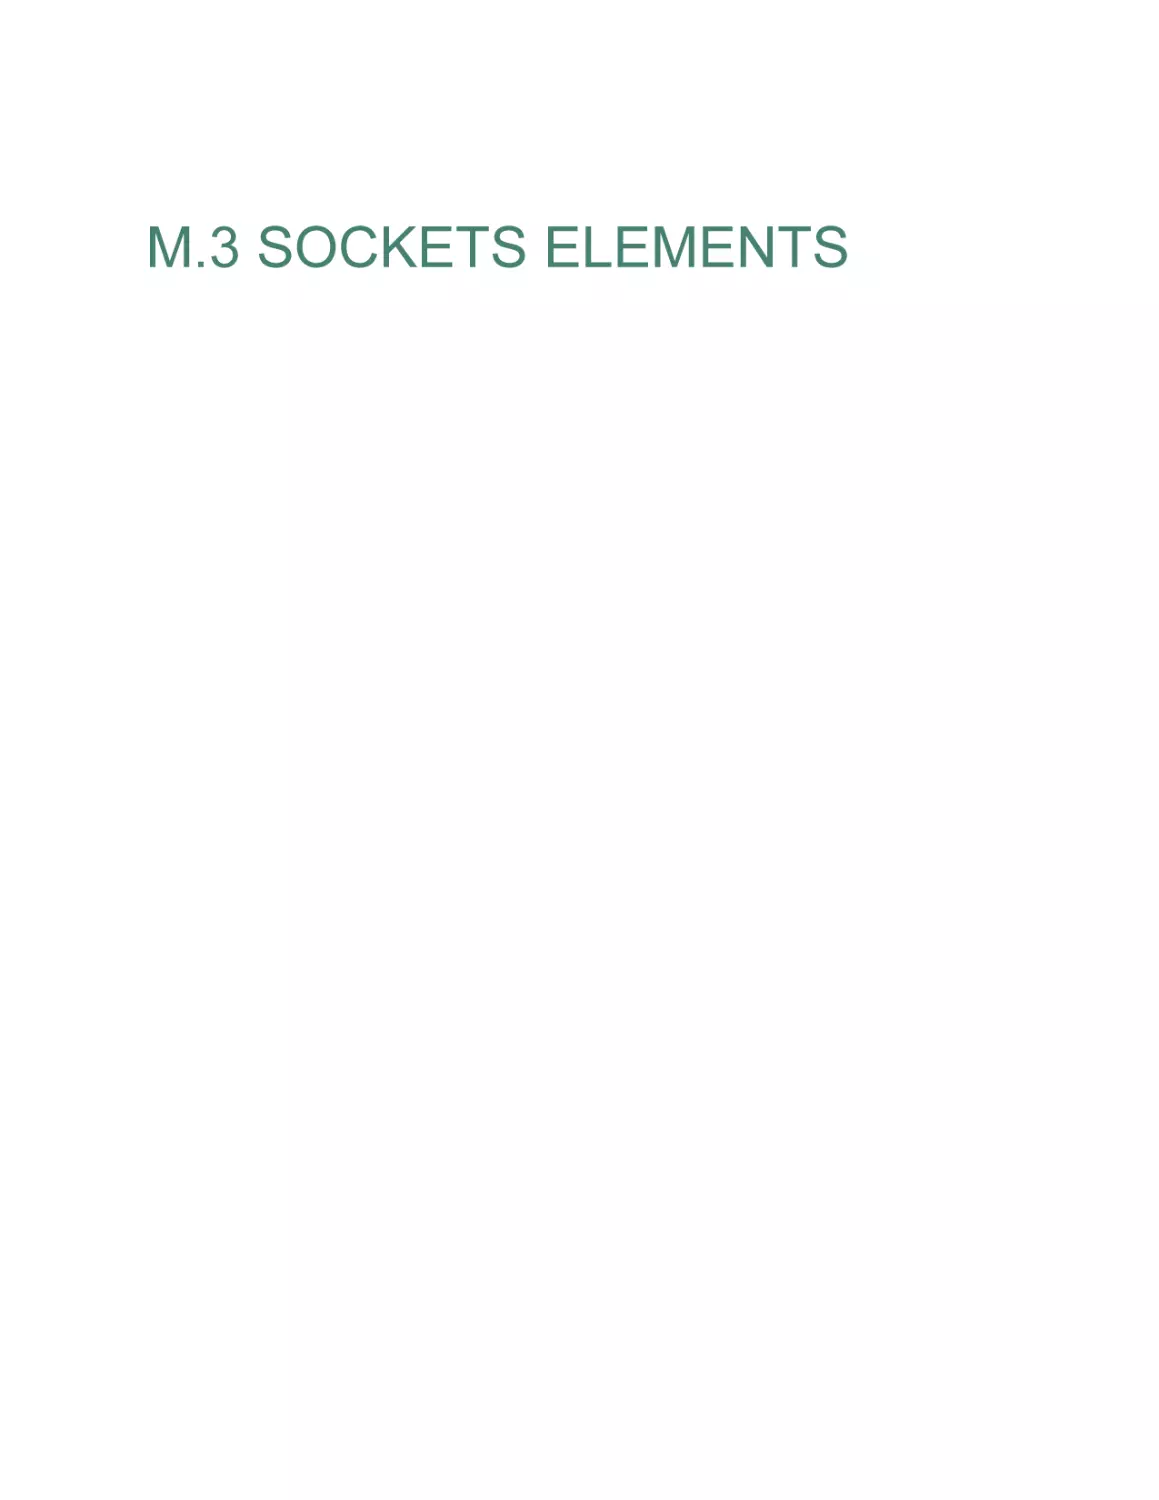 M.3 SOCKETS ELEMENTS